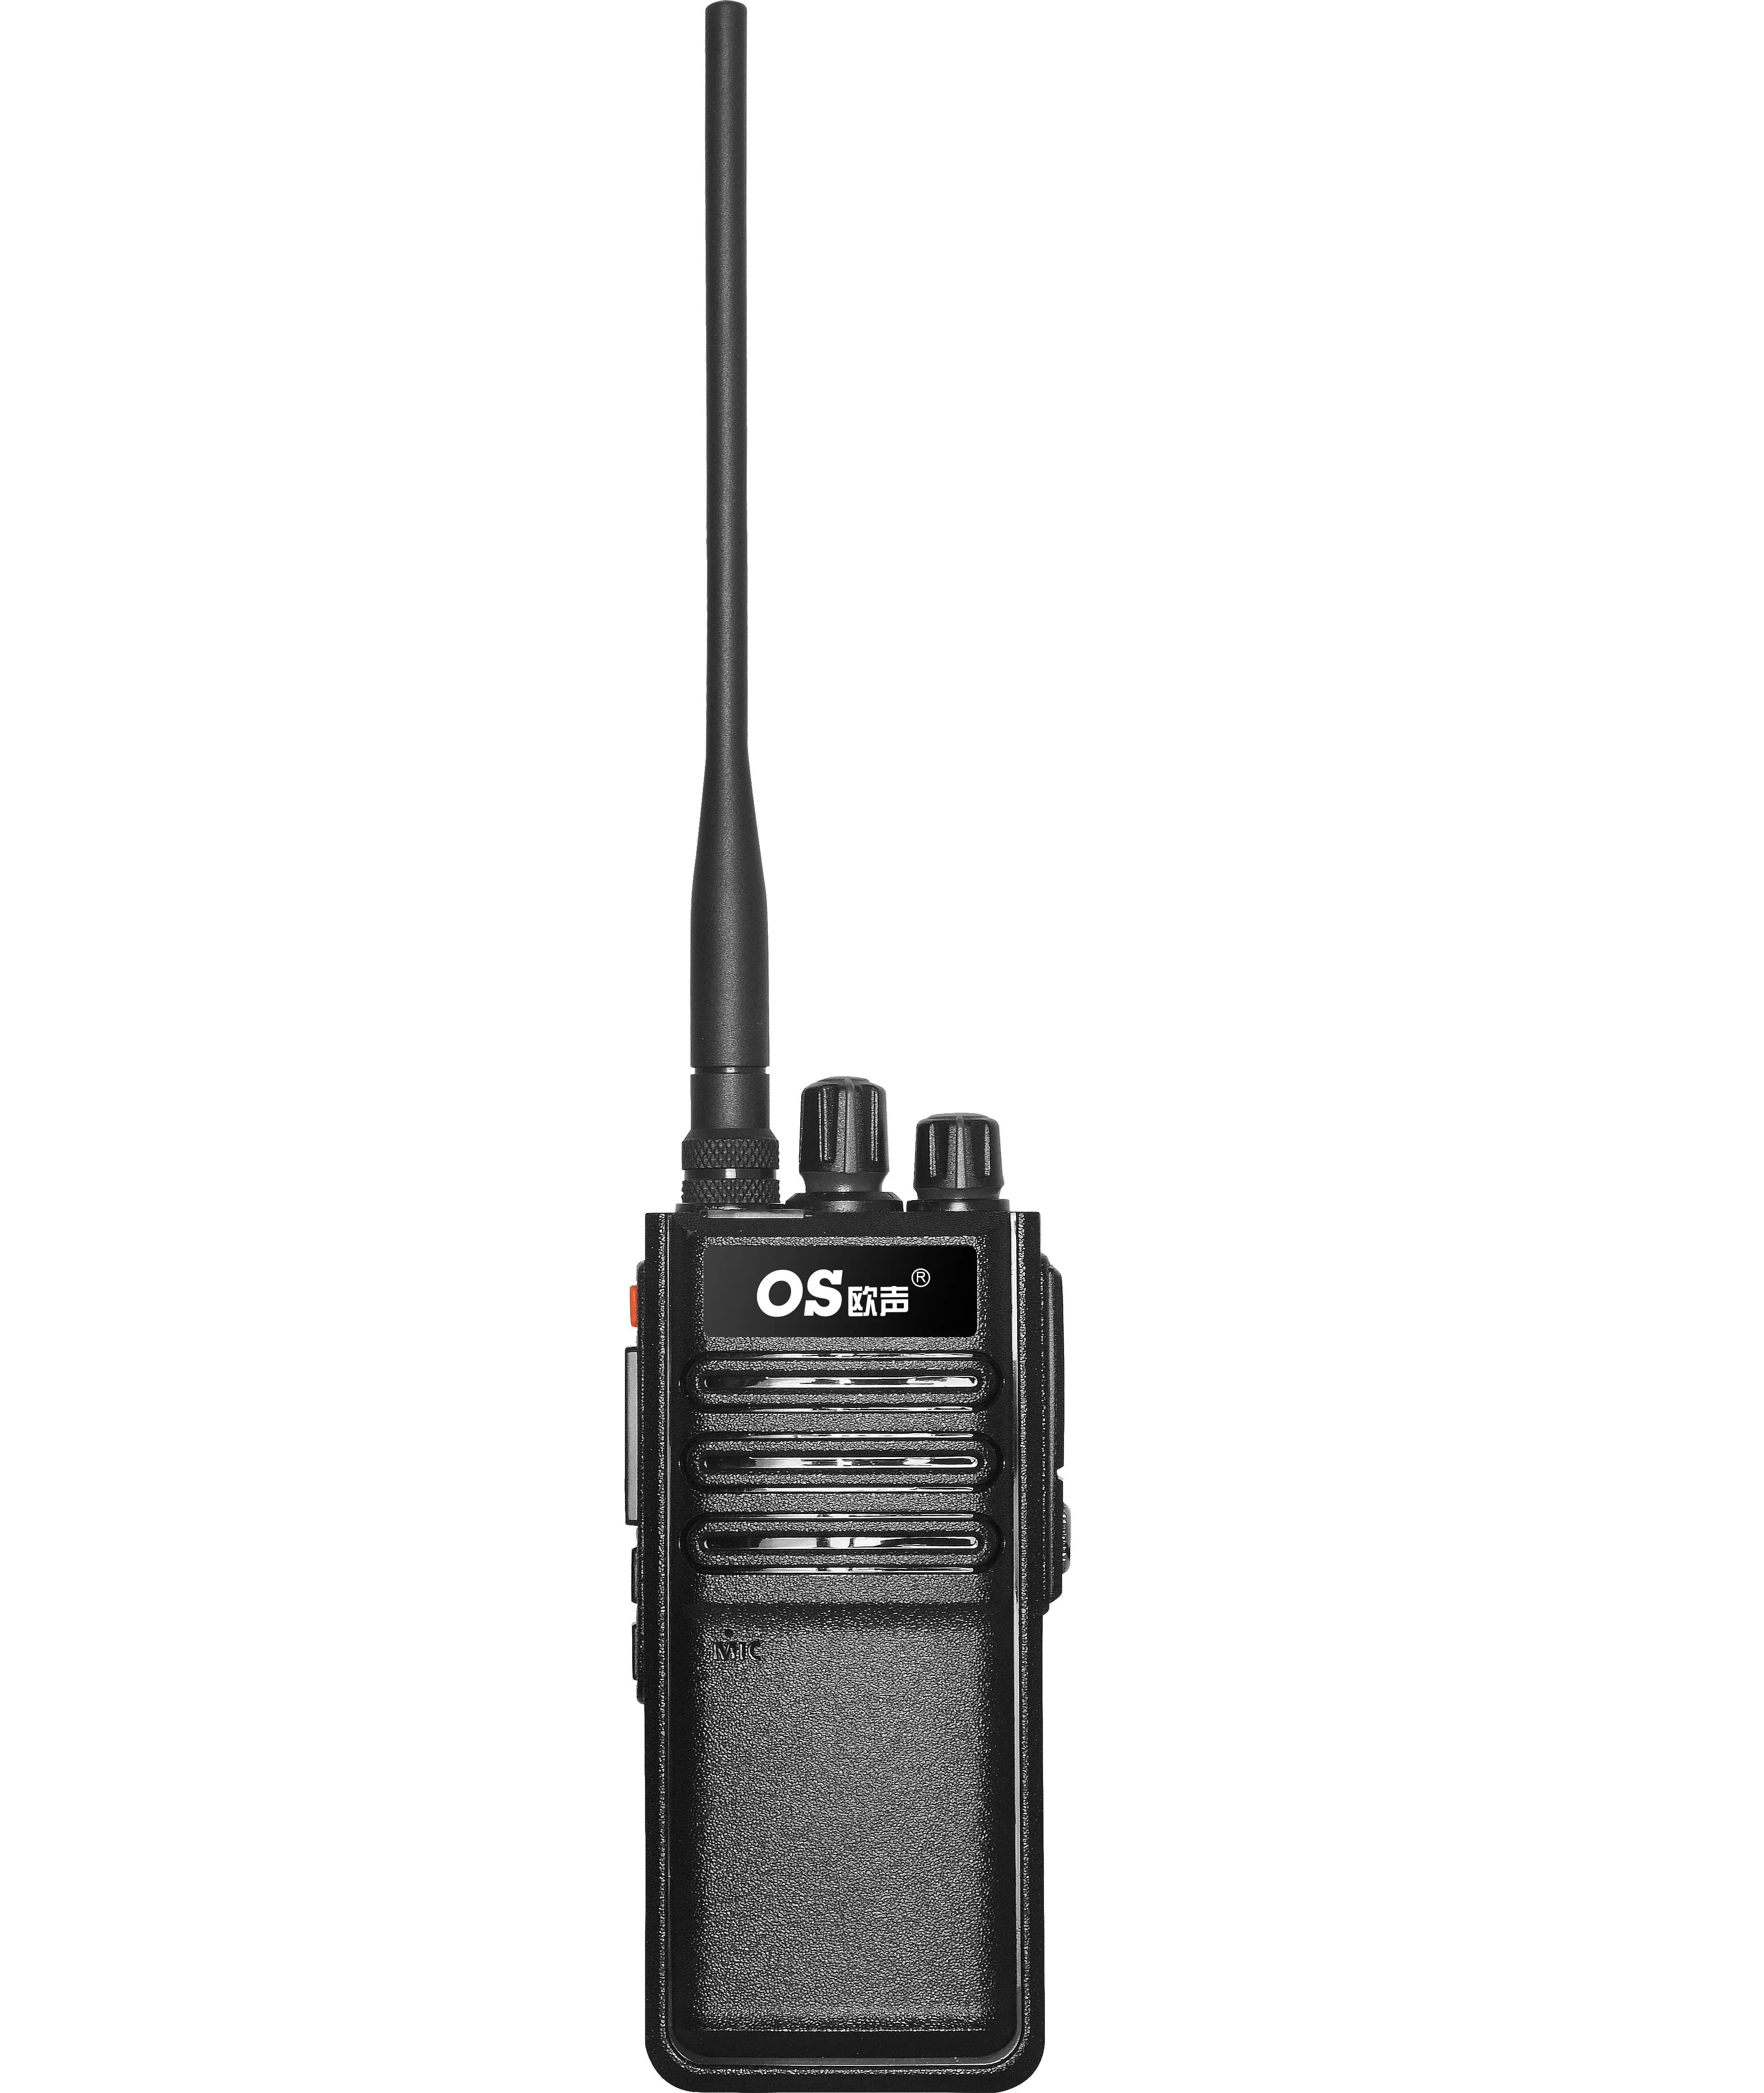 Prezzo di fabbrica all'ingrosso citofono IP68 impermeabile Radio ad alta potenza portatile ODM/OEM Walkie Talkie